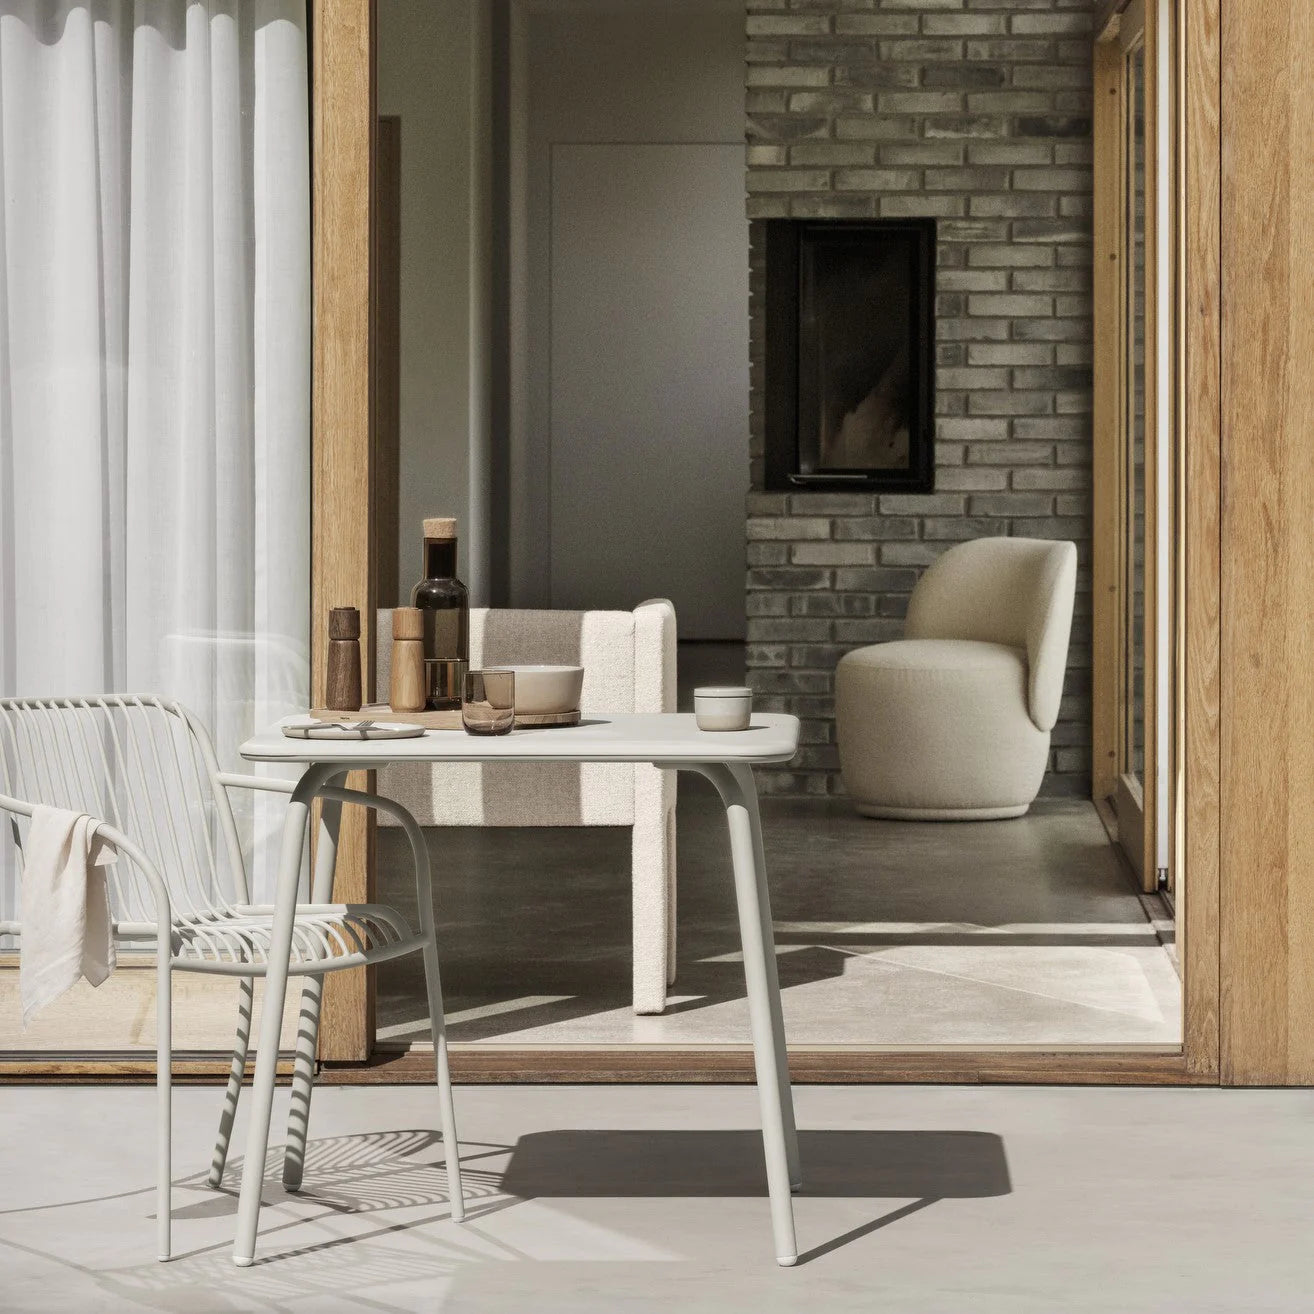 YUA WIRES Outdoor Armchair - Set Of 2 -Granite Grey